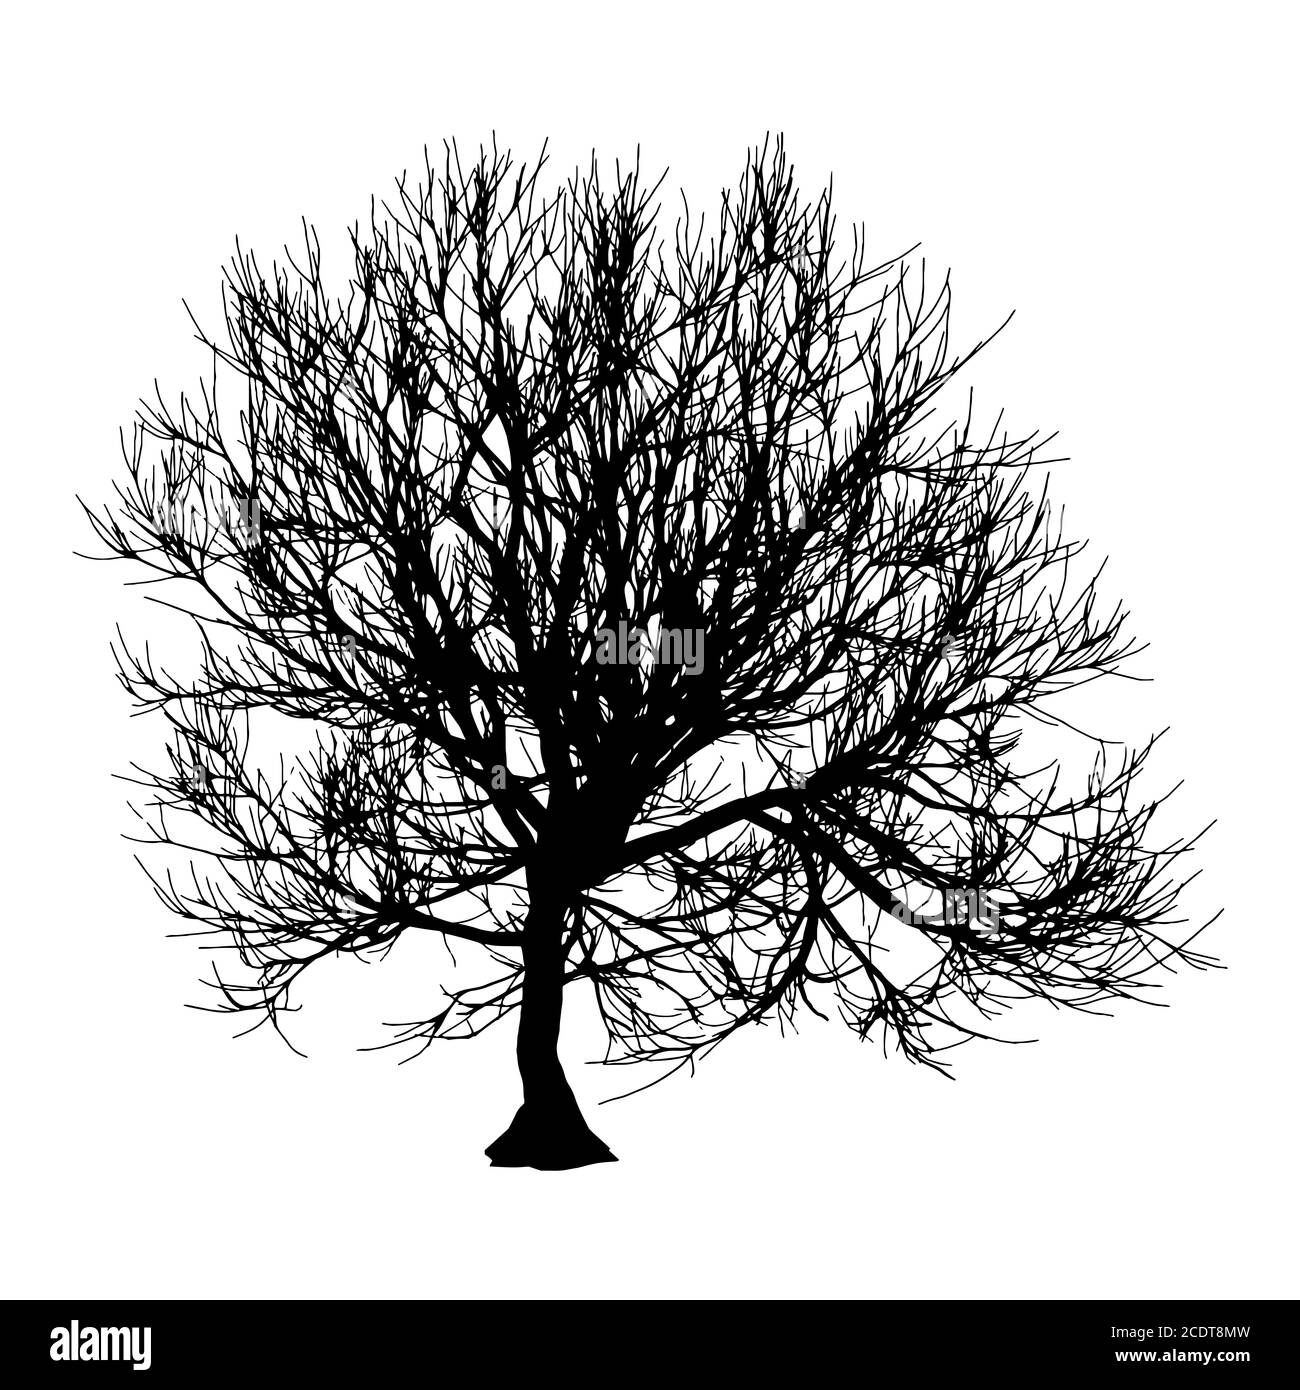 Black dry tree winter or autumn silhouette on white background.  illustration Stock Photo